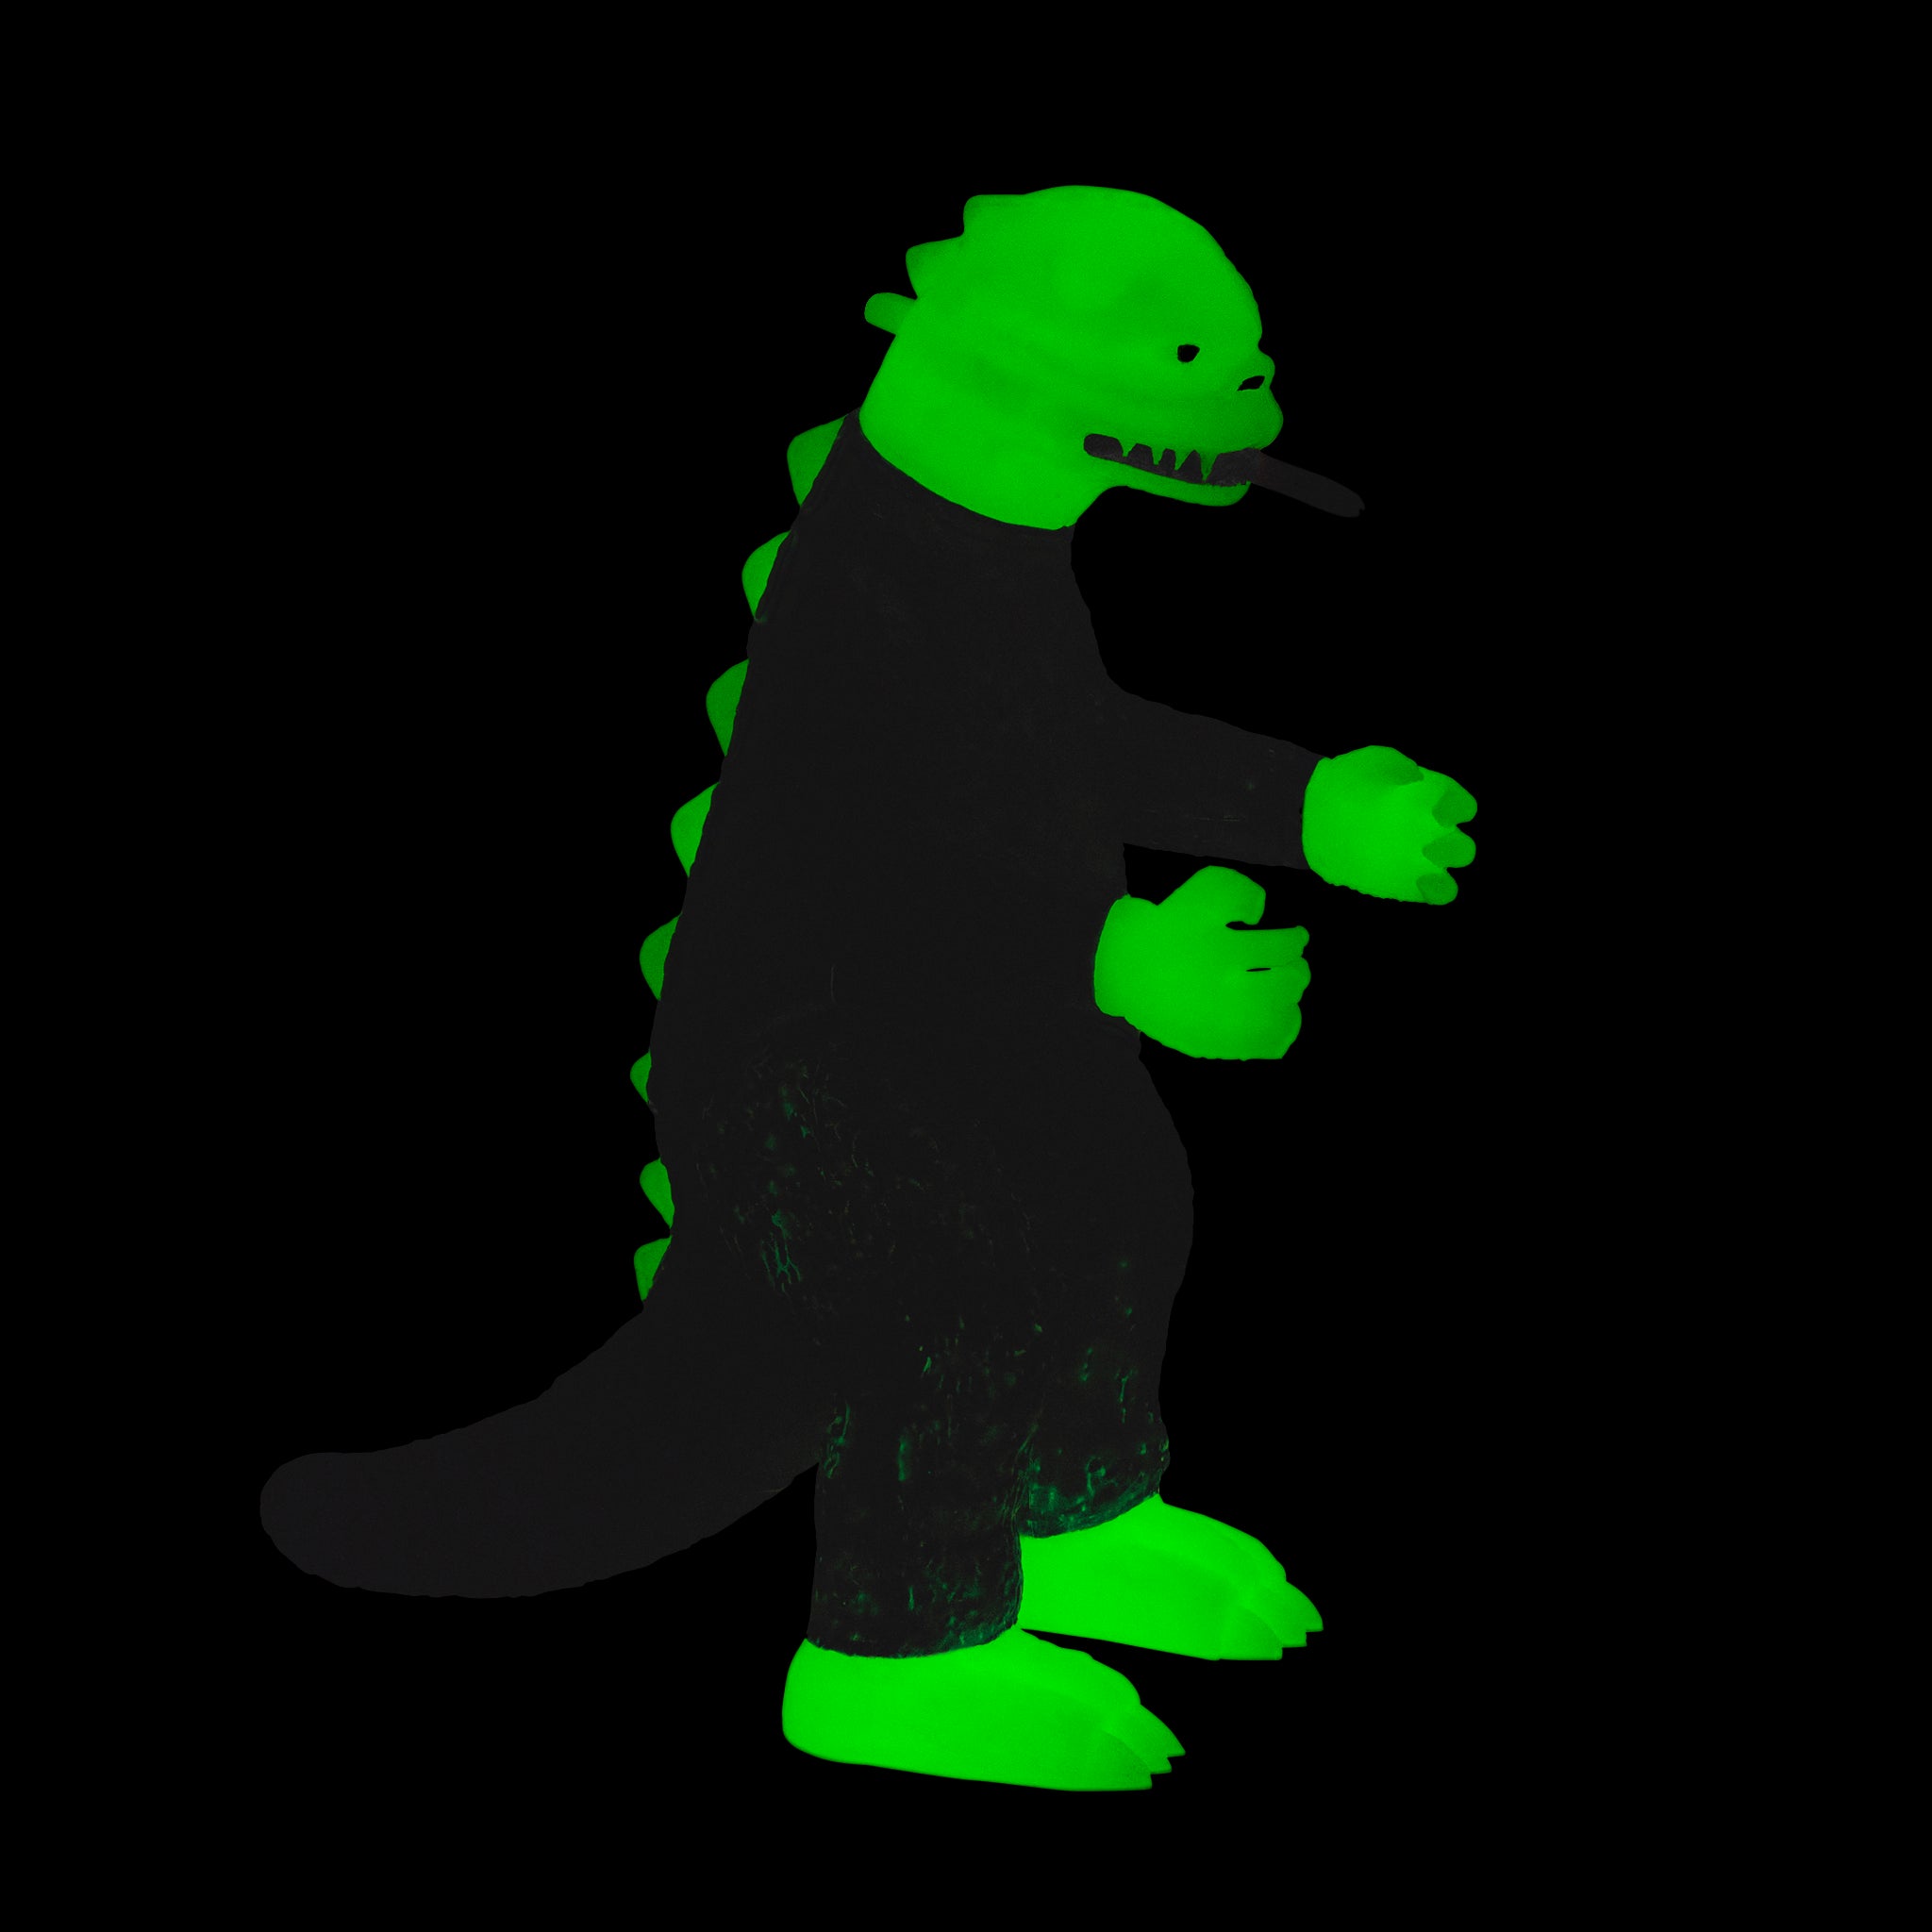 Godzilla ReAction Figure - Shogun (Glow-In-The-Dark)